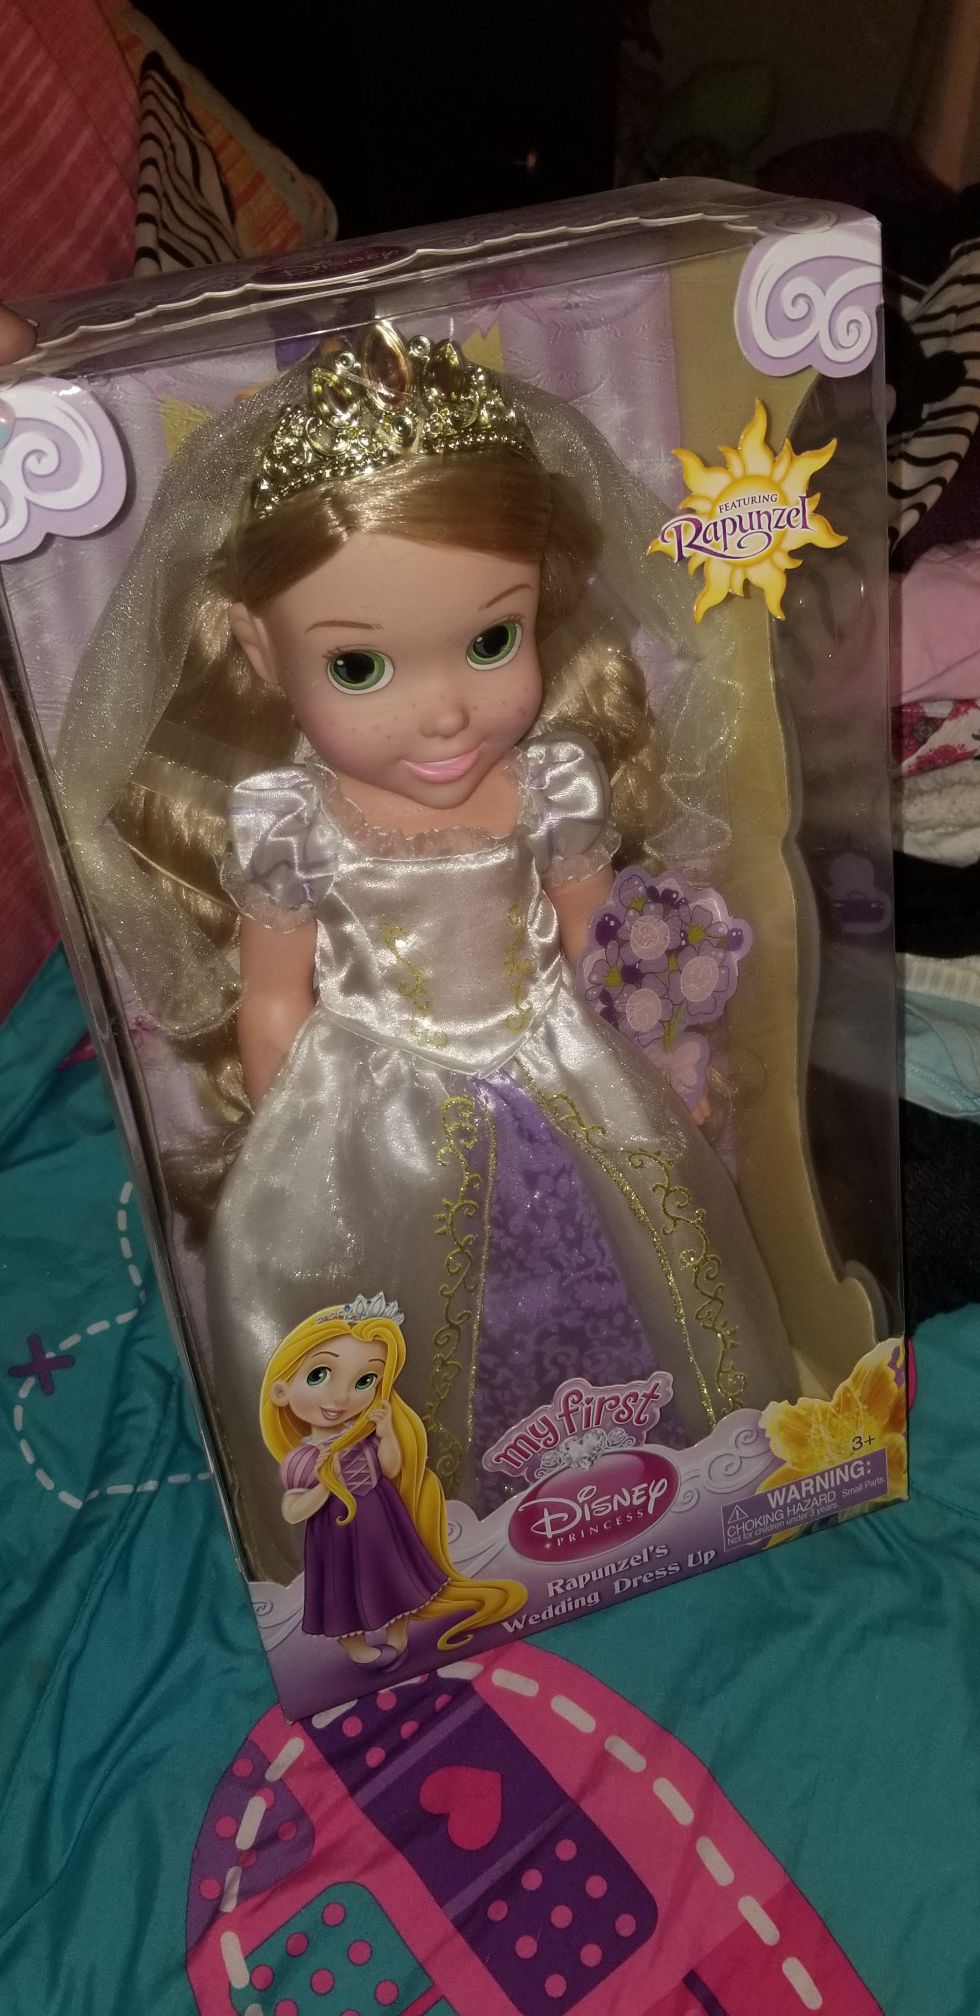 Brand new Rapunzel Doll